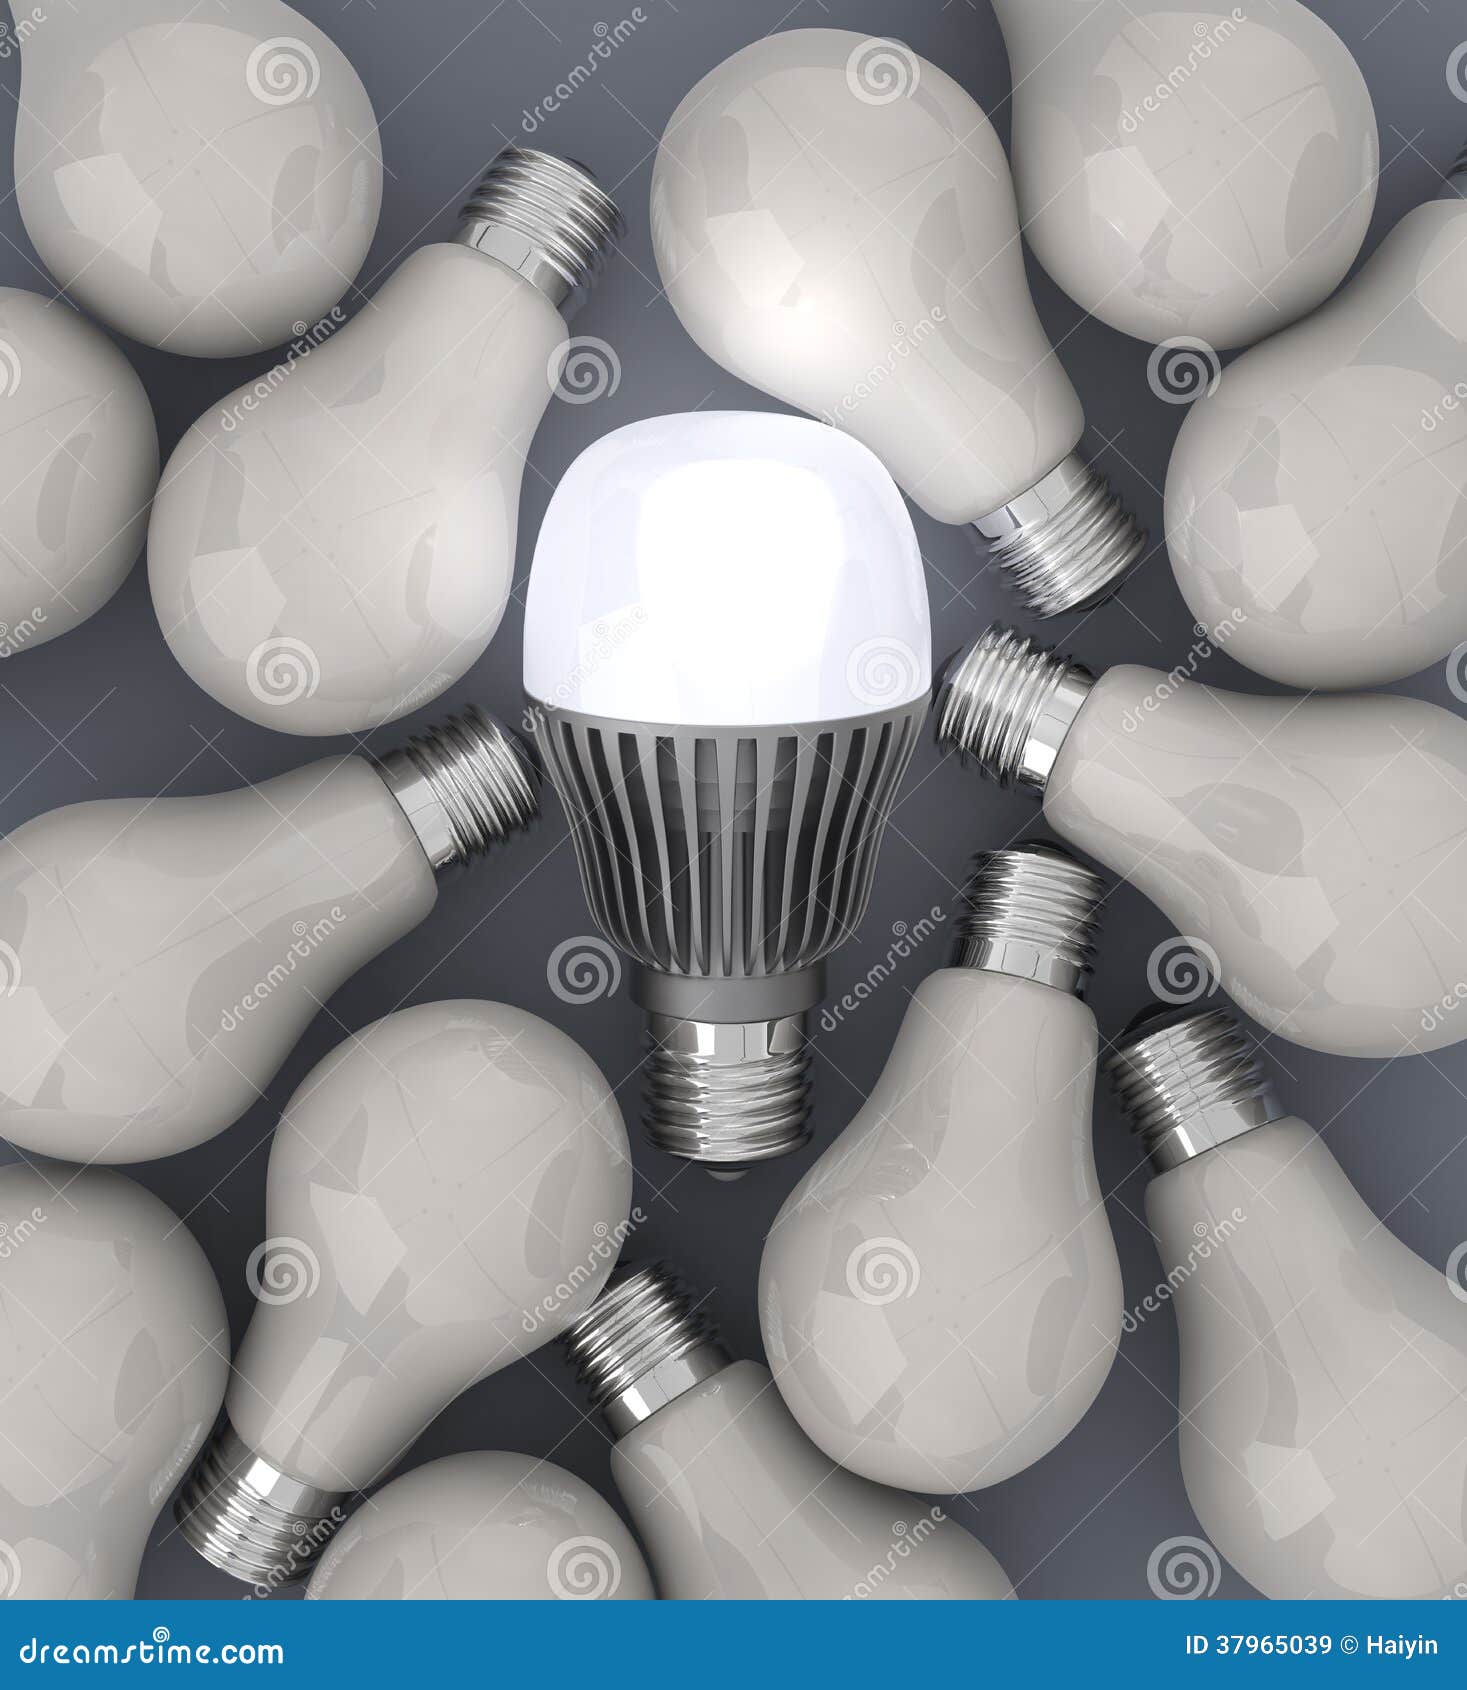 led and filaments light bulbs